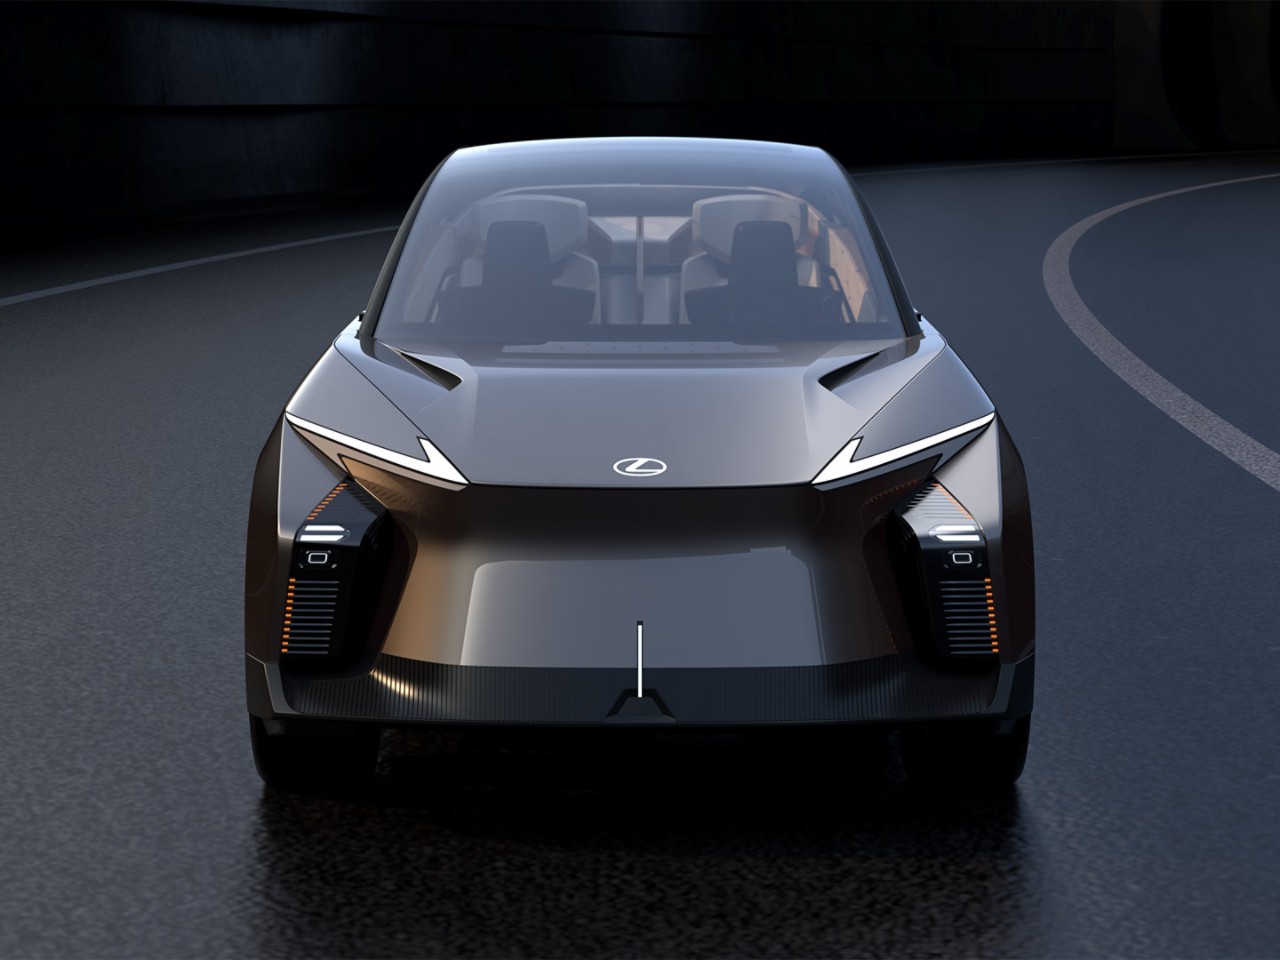 Lexus LF-ZL concept car driving on a road